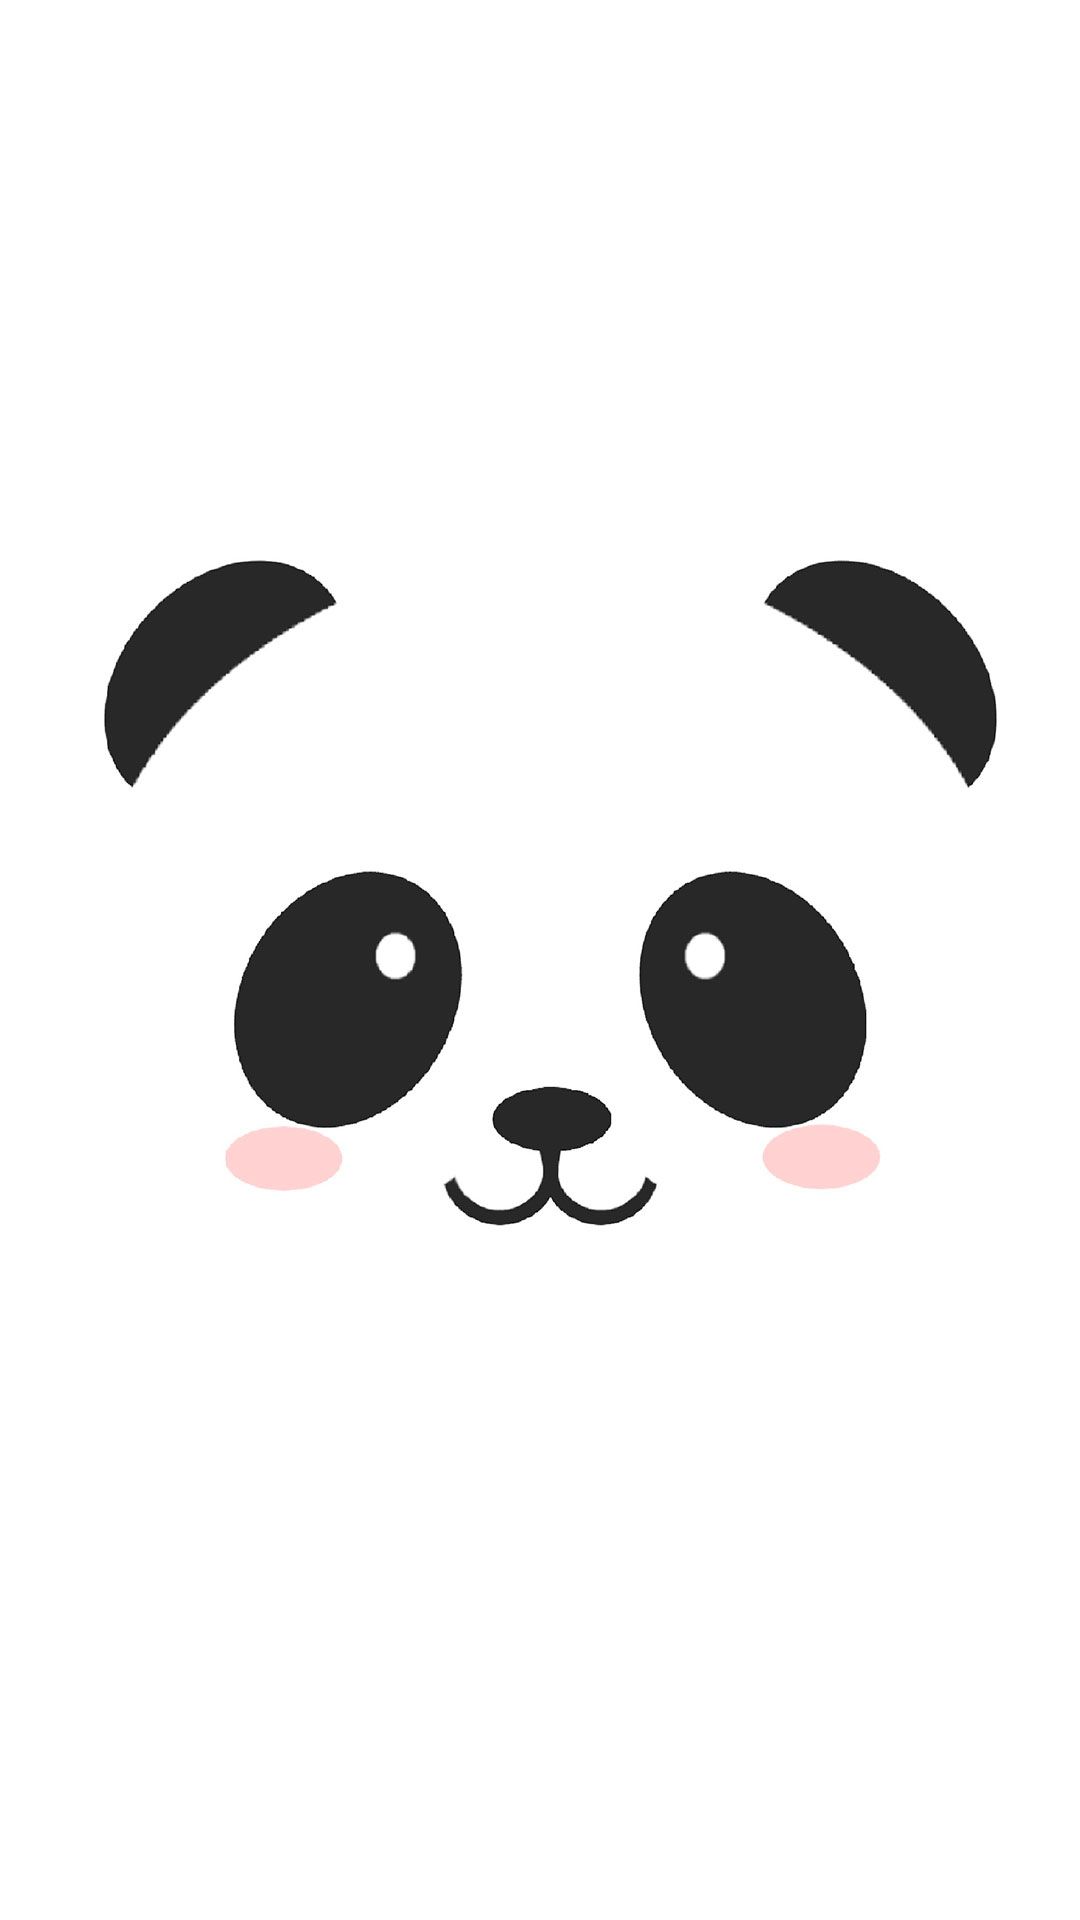 Panda Wallpaper for iPhone Pro Max, X, 6